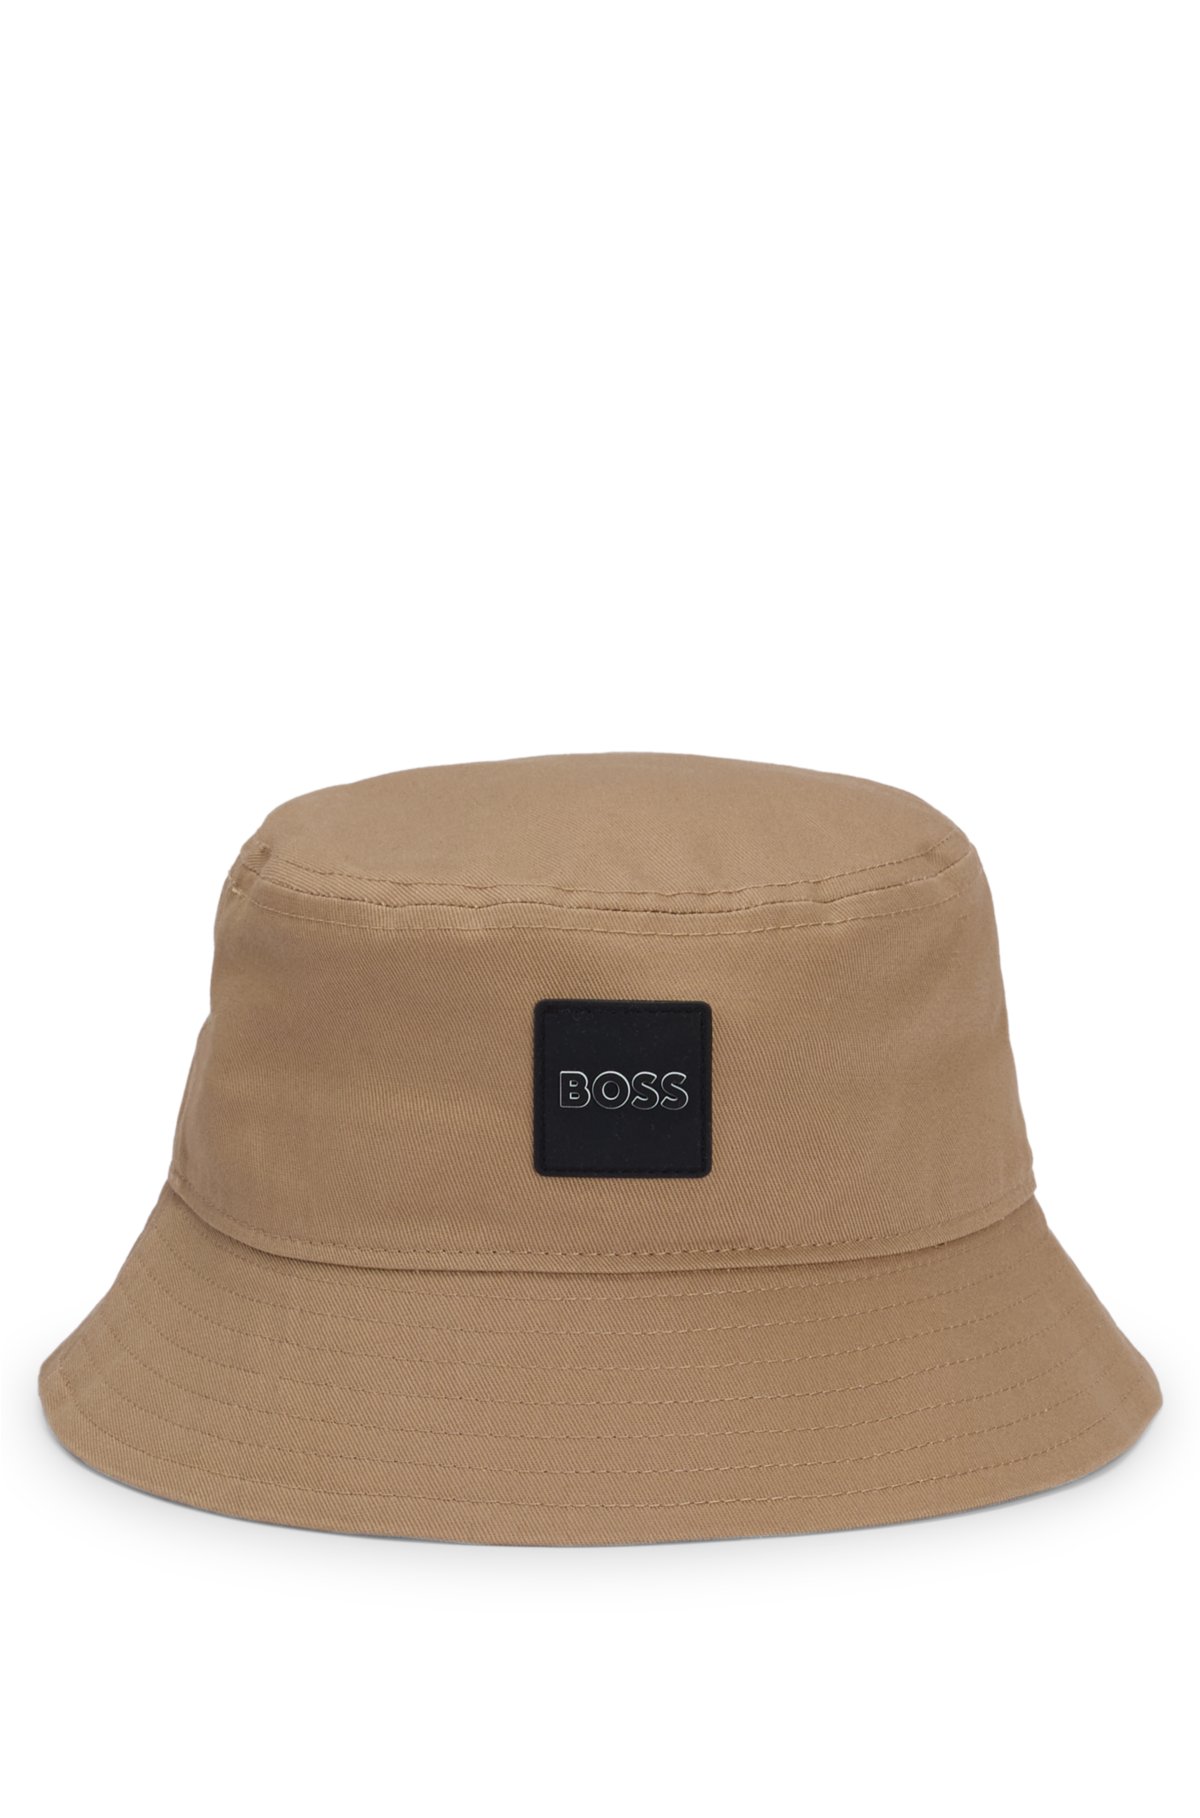 BOSS - Kids' bucket hat in cotton twill with rubber logo